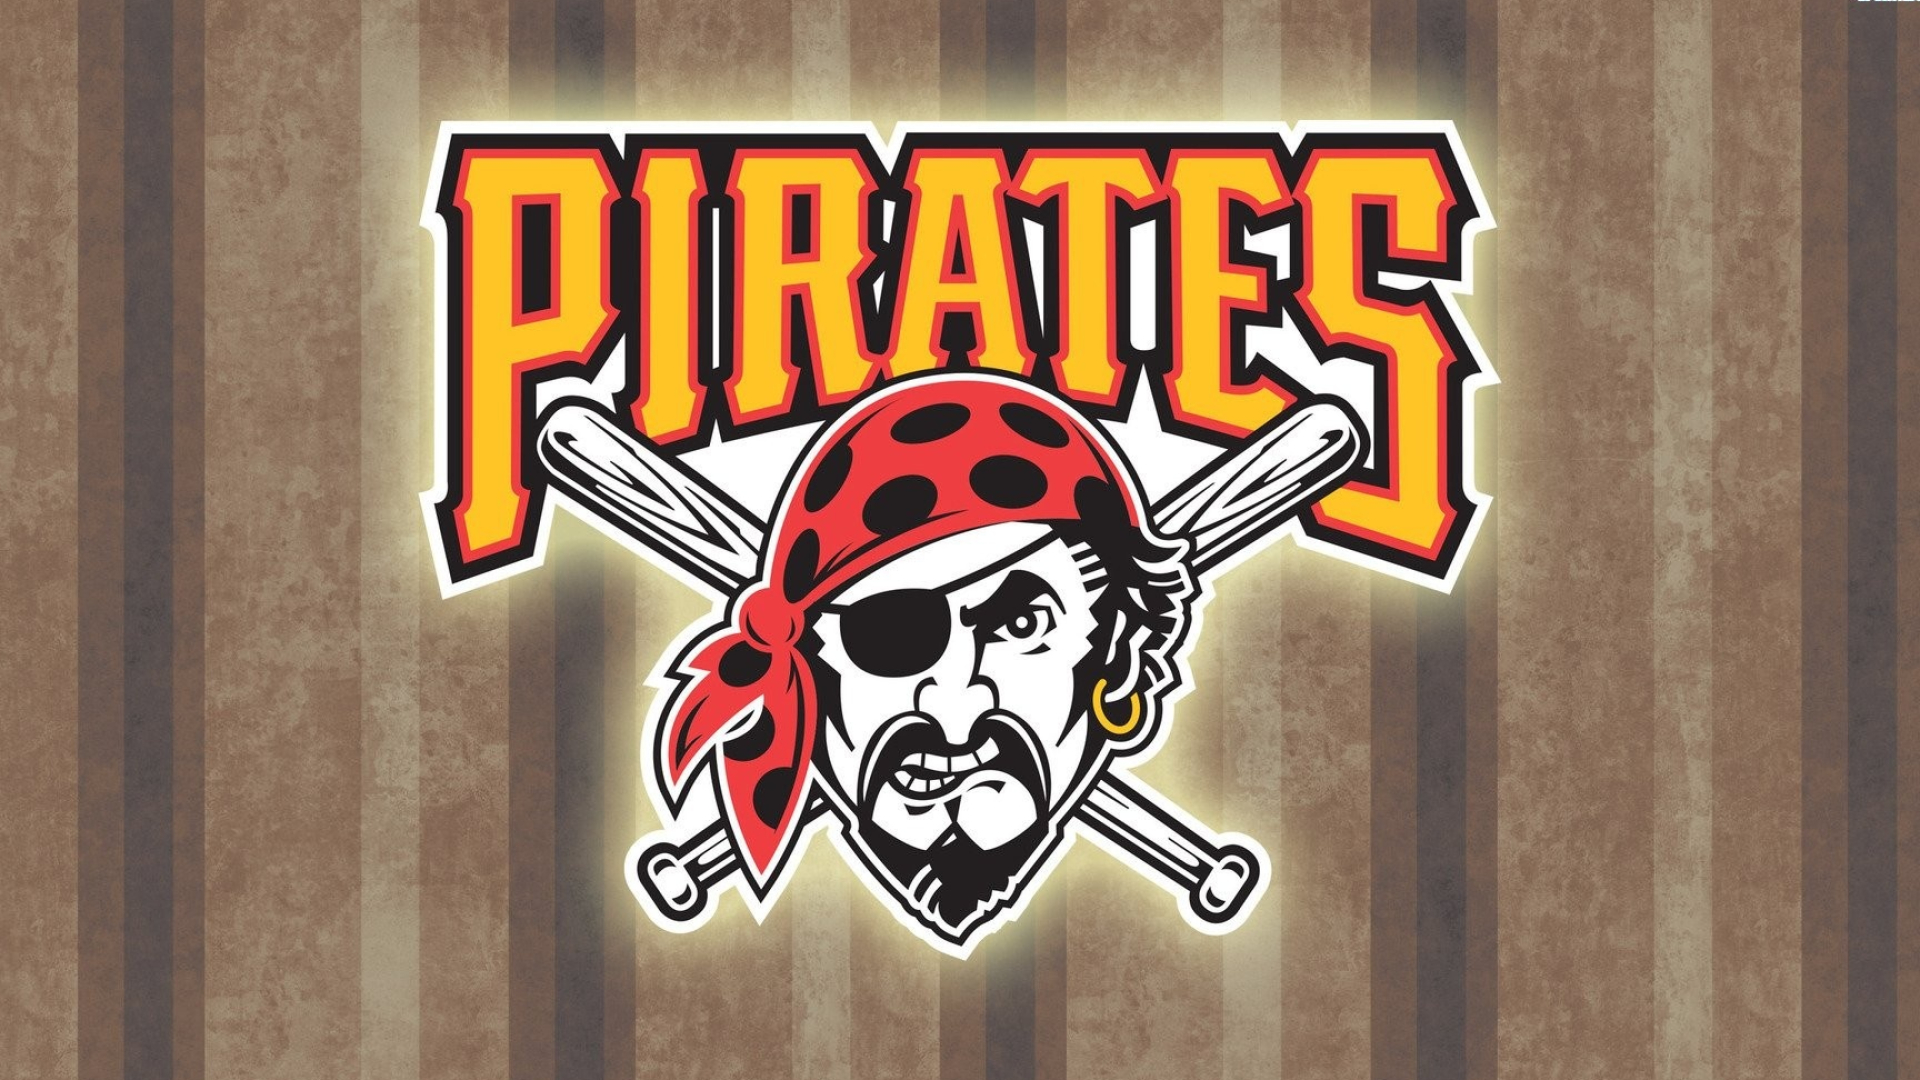 Pittsburgh Pirates, Baseball team, Desktop wallpapers, Sports fanatics, 1920x1080 Full HD Desktop